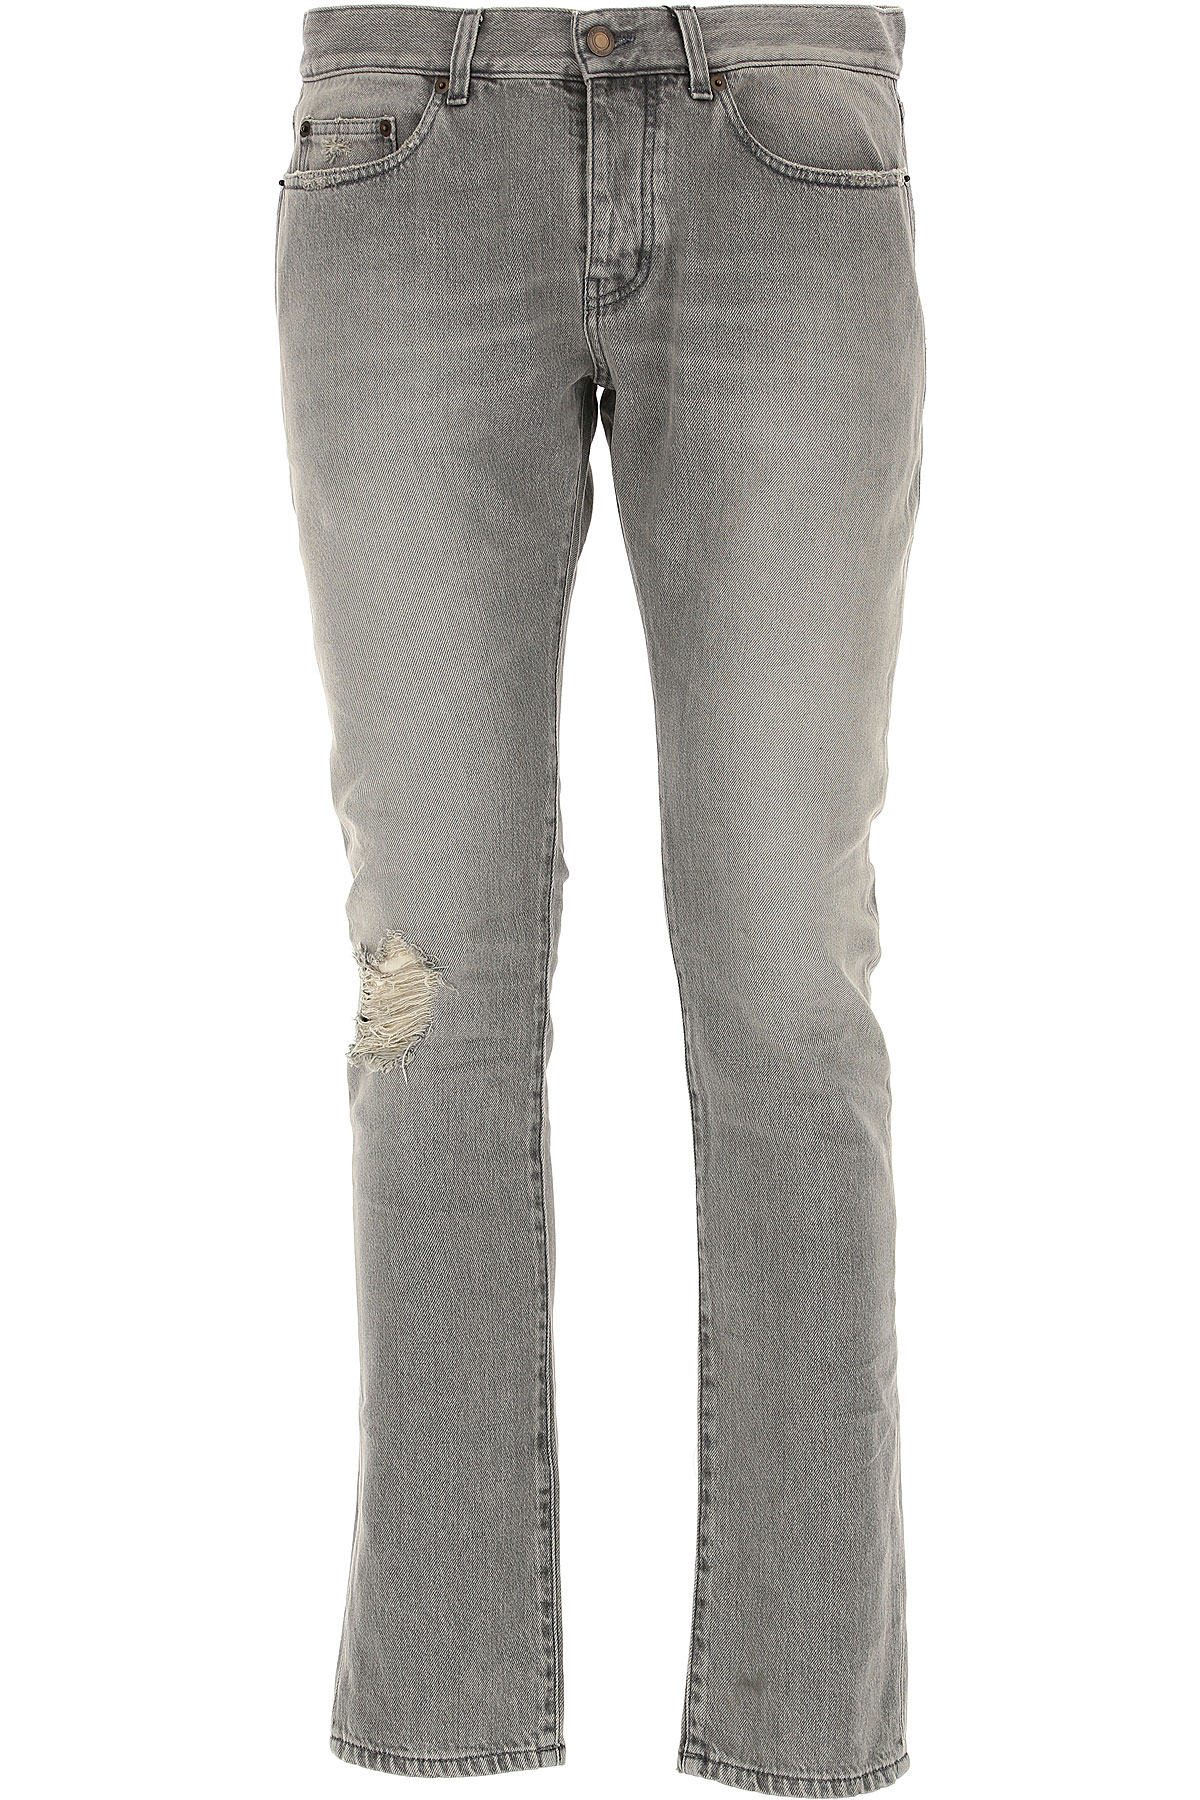 Yves Saint Laurent Jeans, Bluejeans, Denim Jeans für Herren Günstig im Outlet Sale, Grau, Baumwolle, 2017, 48 49 50